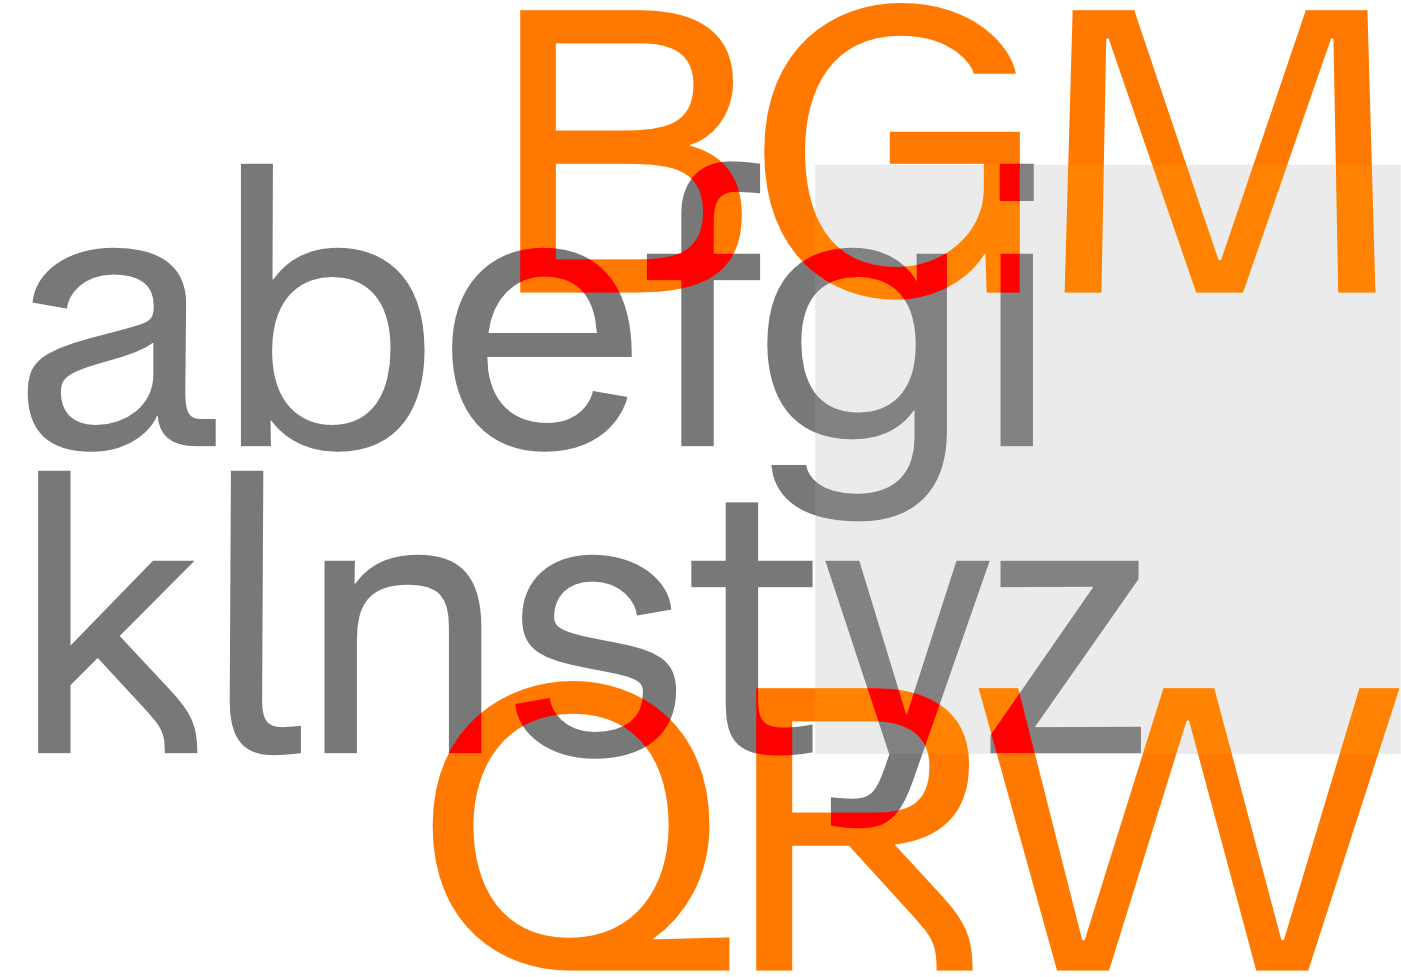 Analogue sans serif key letters